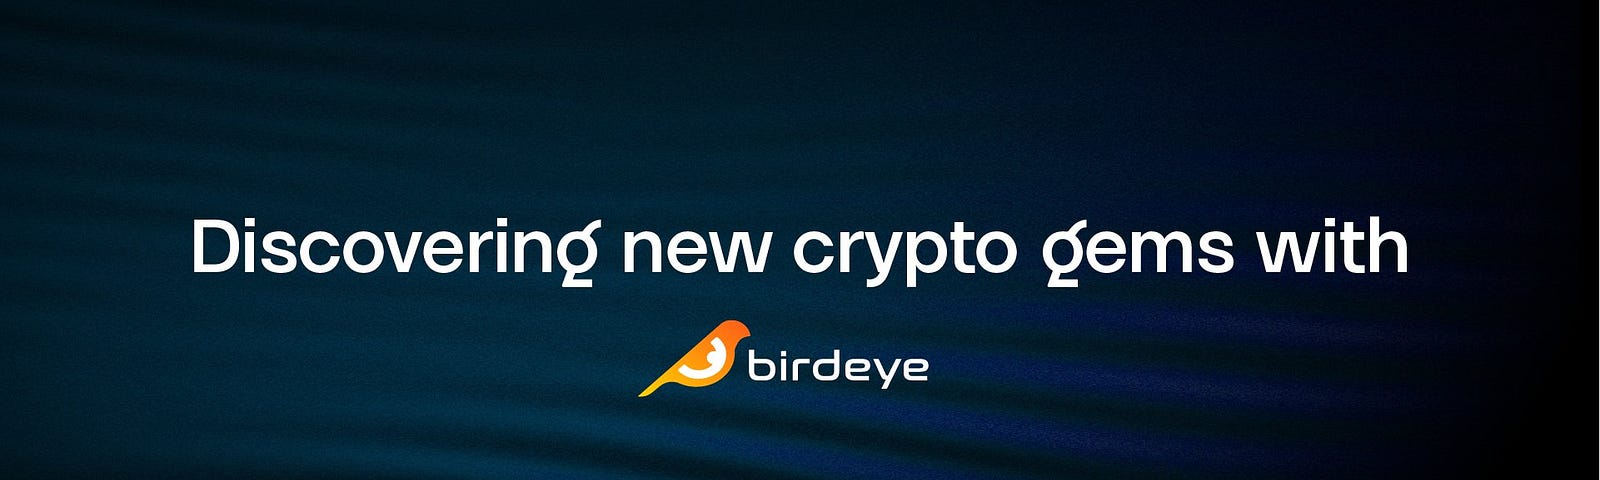 birdeye crypto